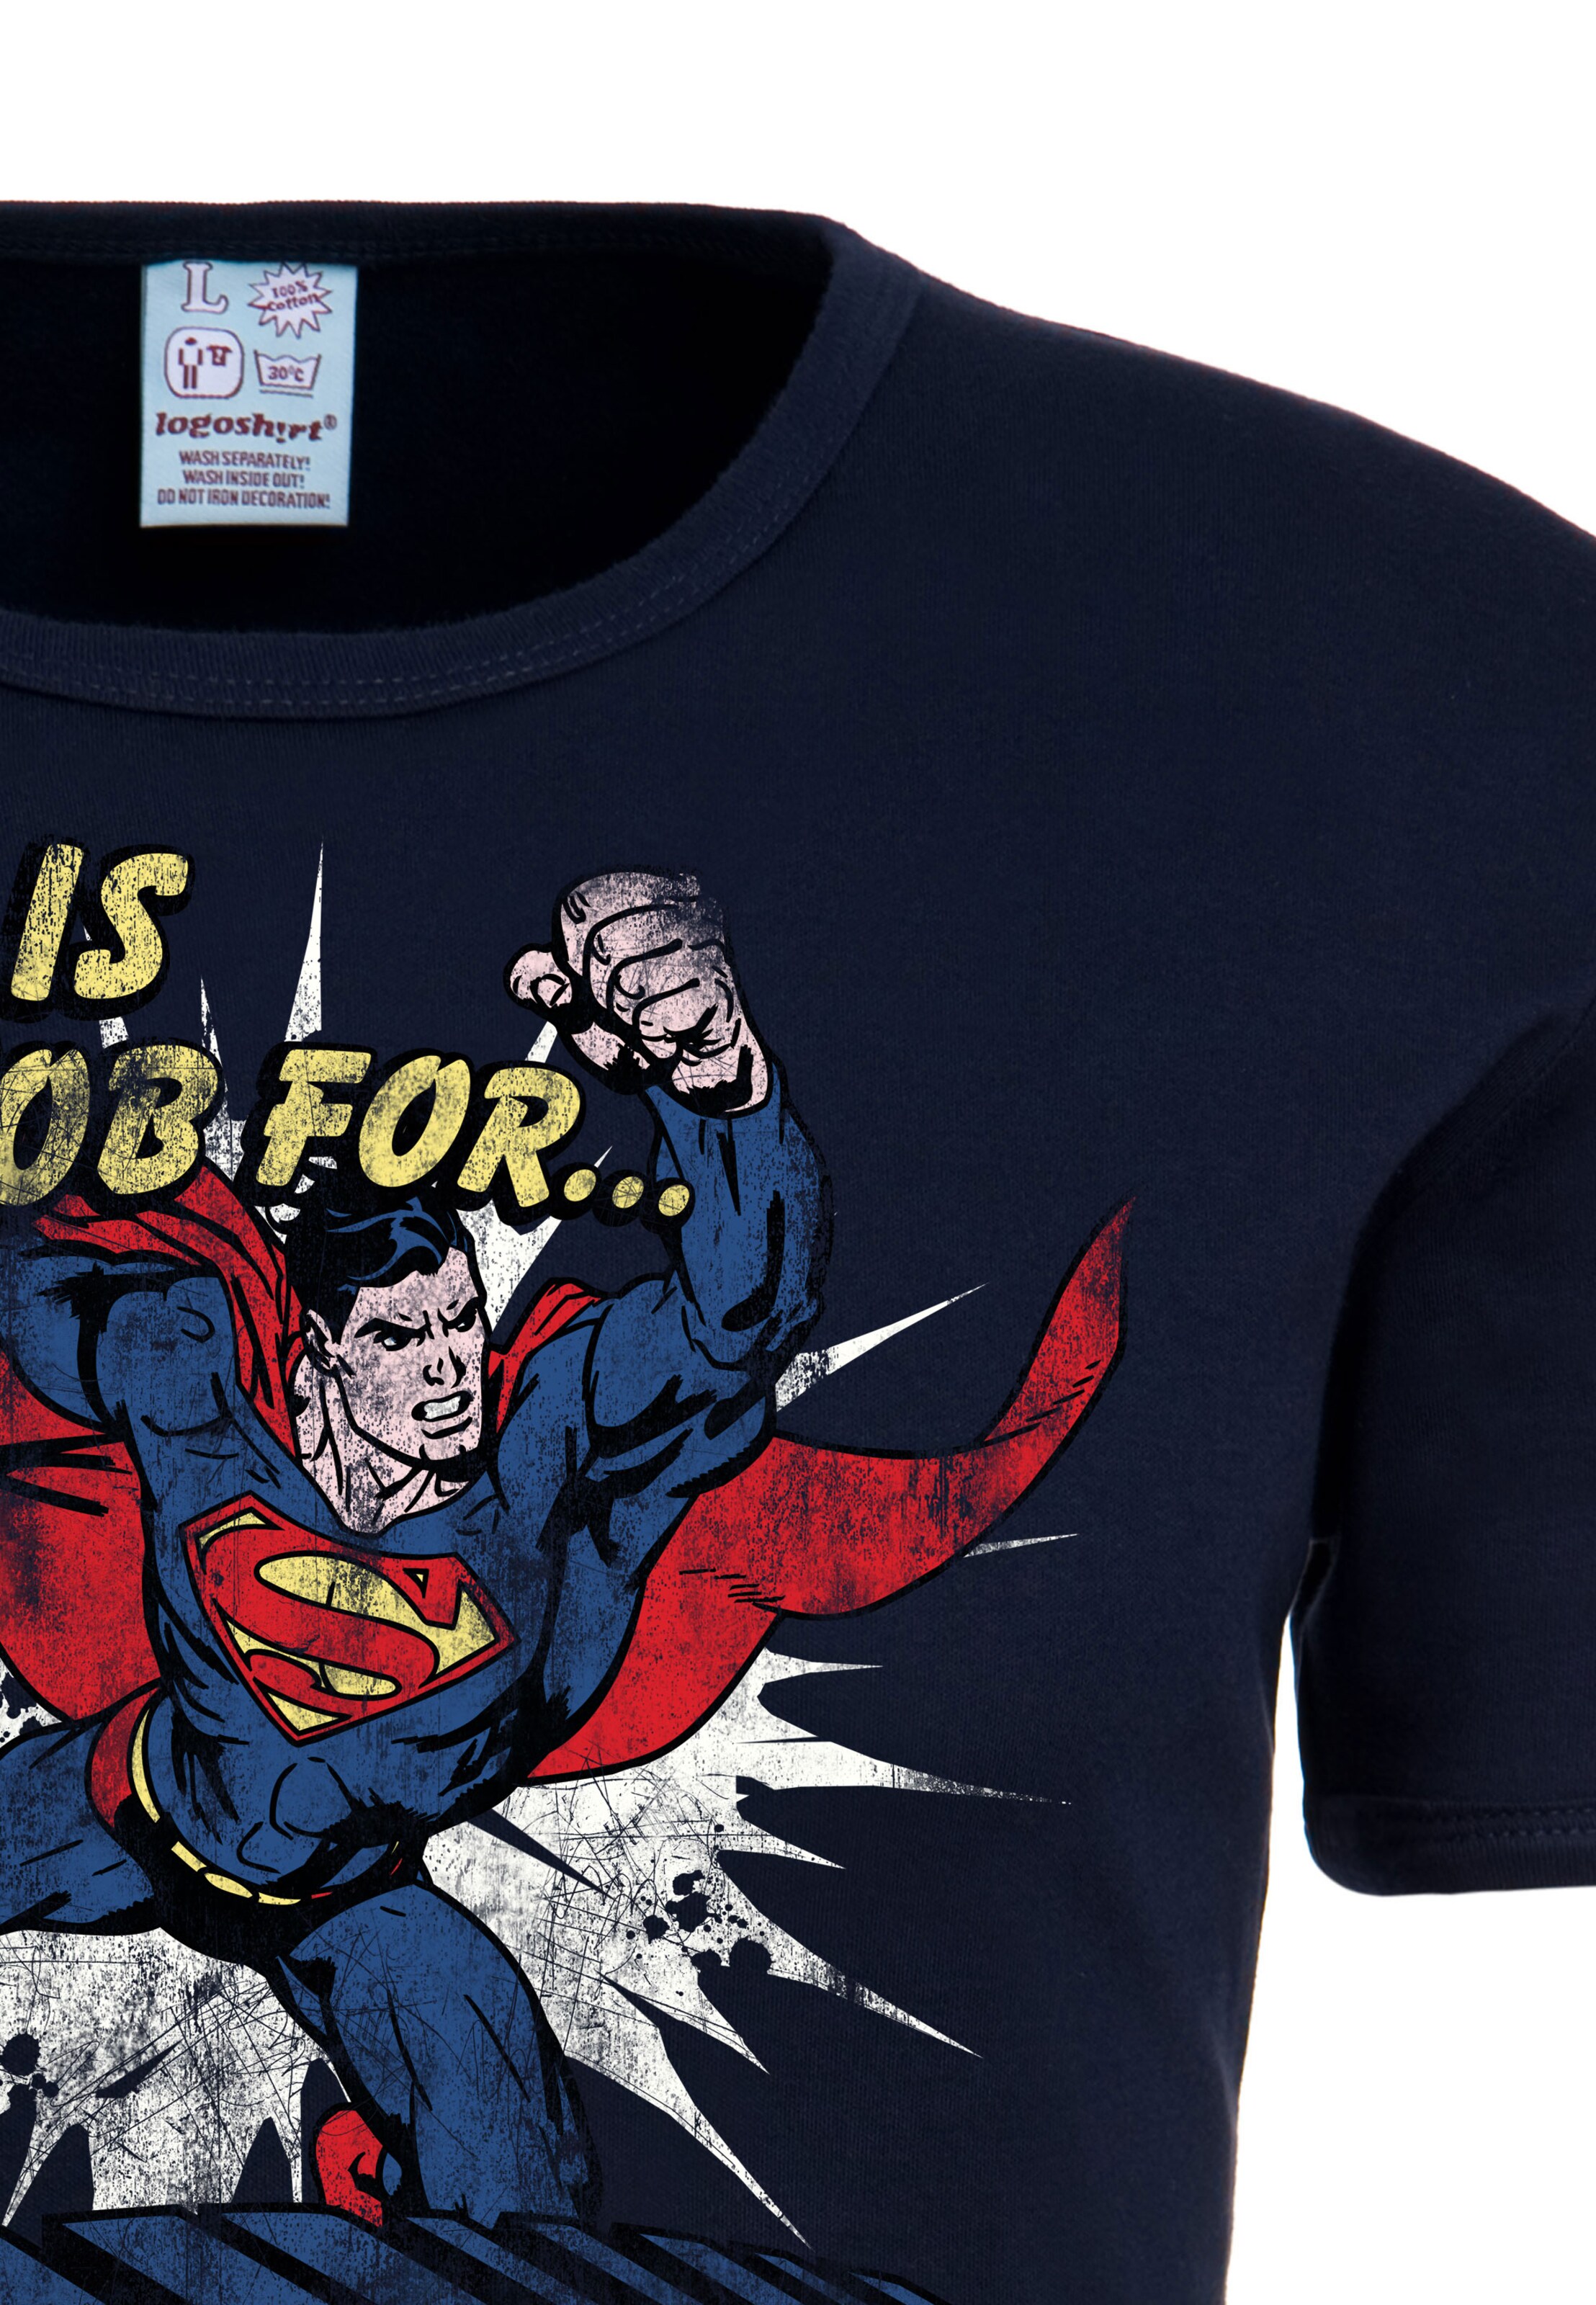 Männer Shirts LOGOSHIRT T-Shirt mit coolem 'Superman'-Print in Blau - EM80188